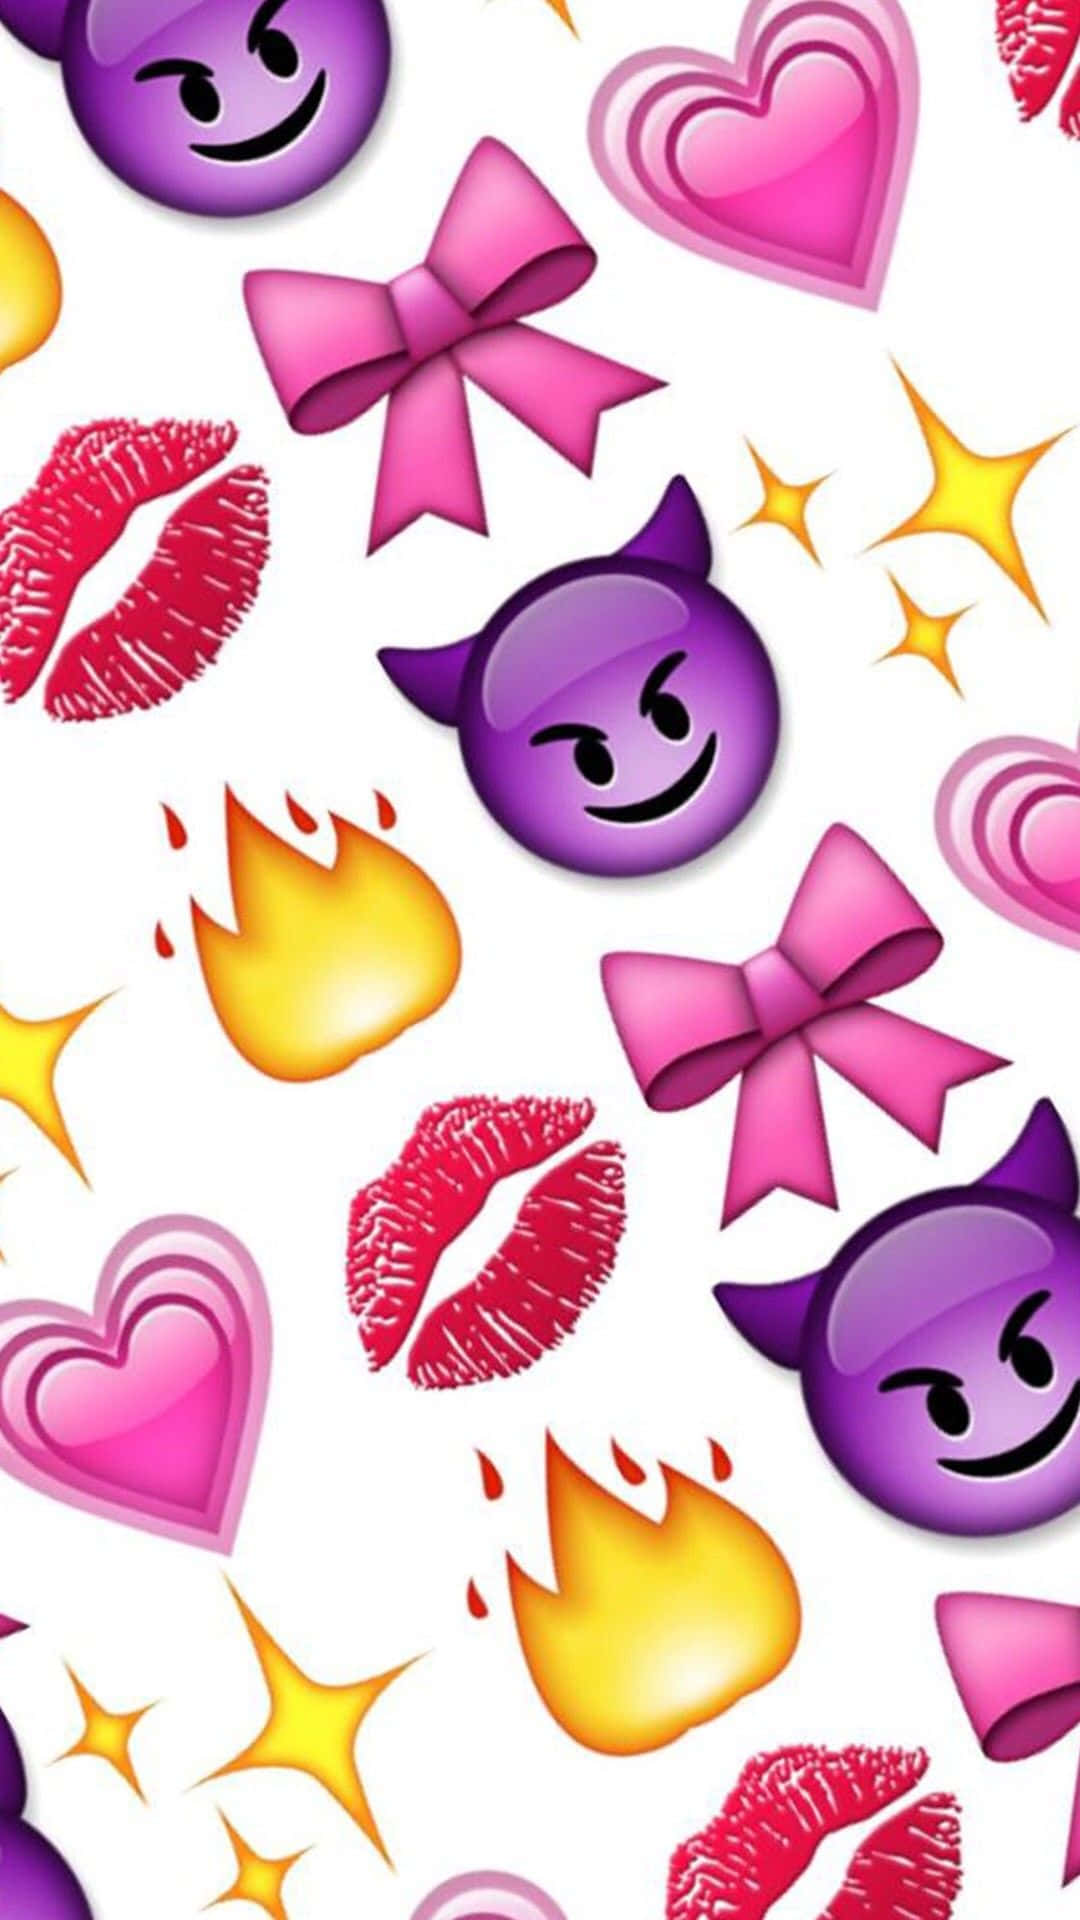 Download Queen Girly Cute Emoji Pattern Wallpaper | Wallpapers.com